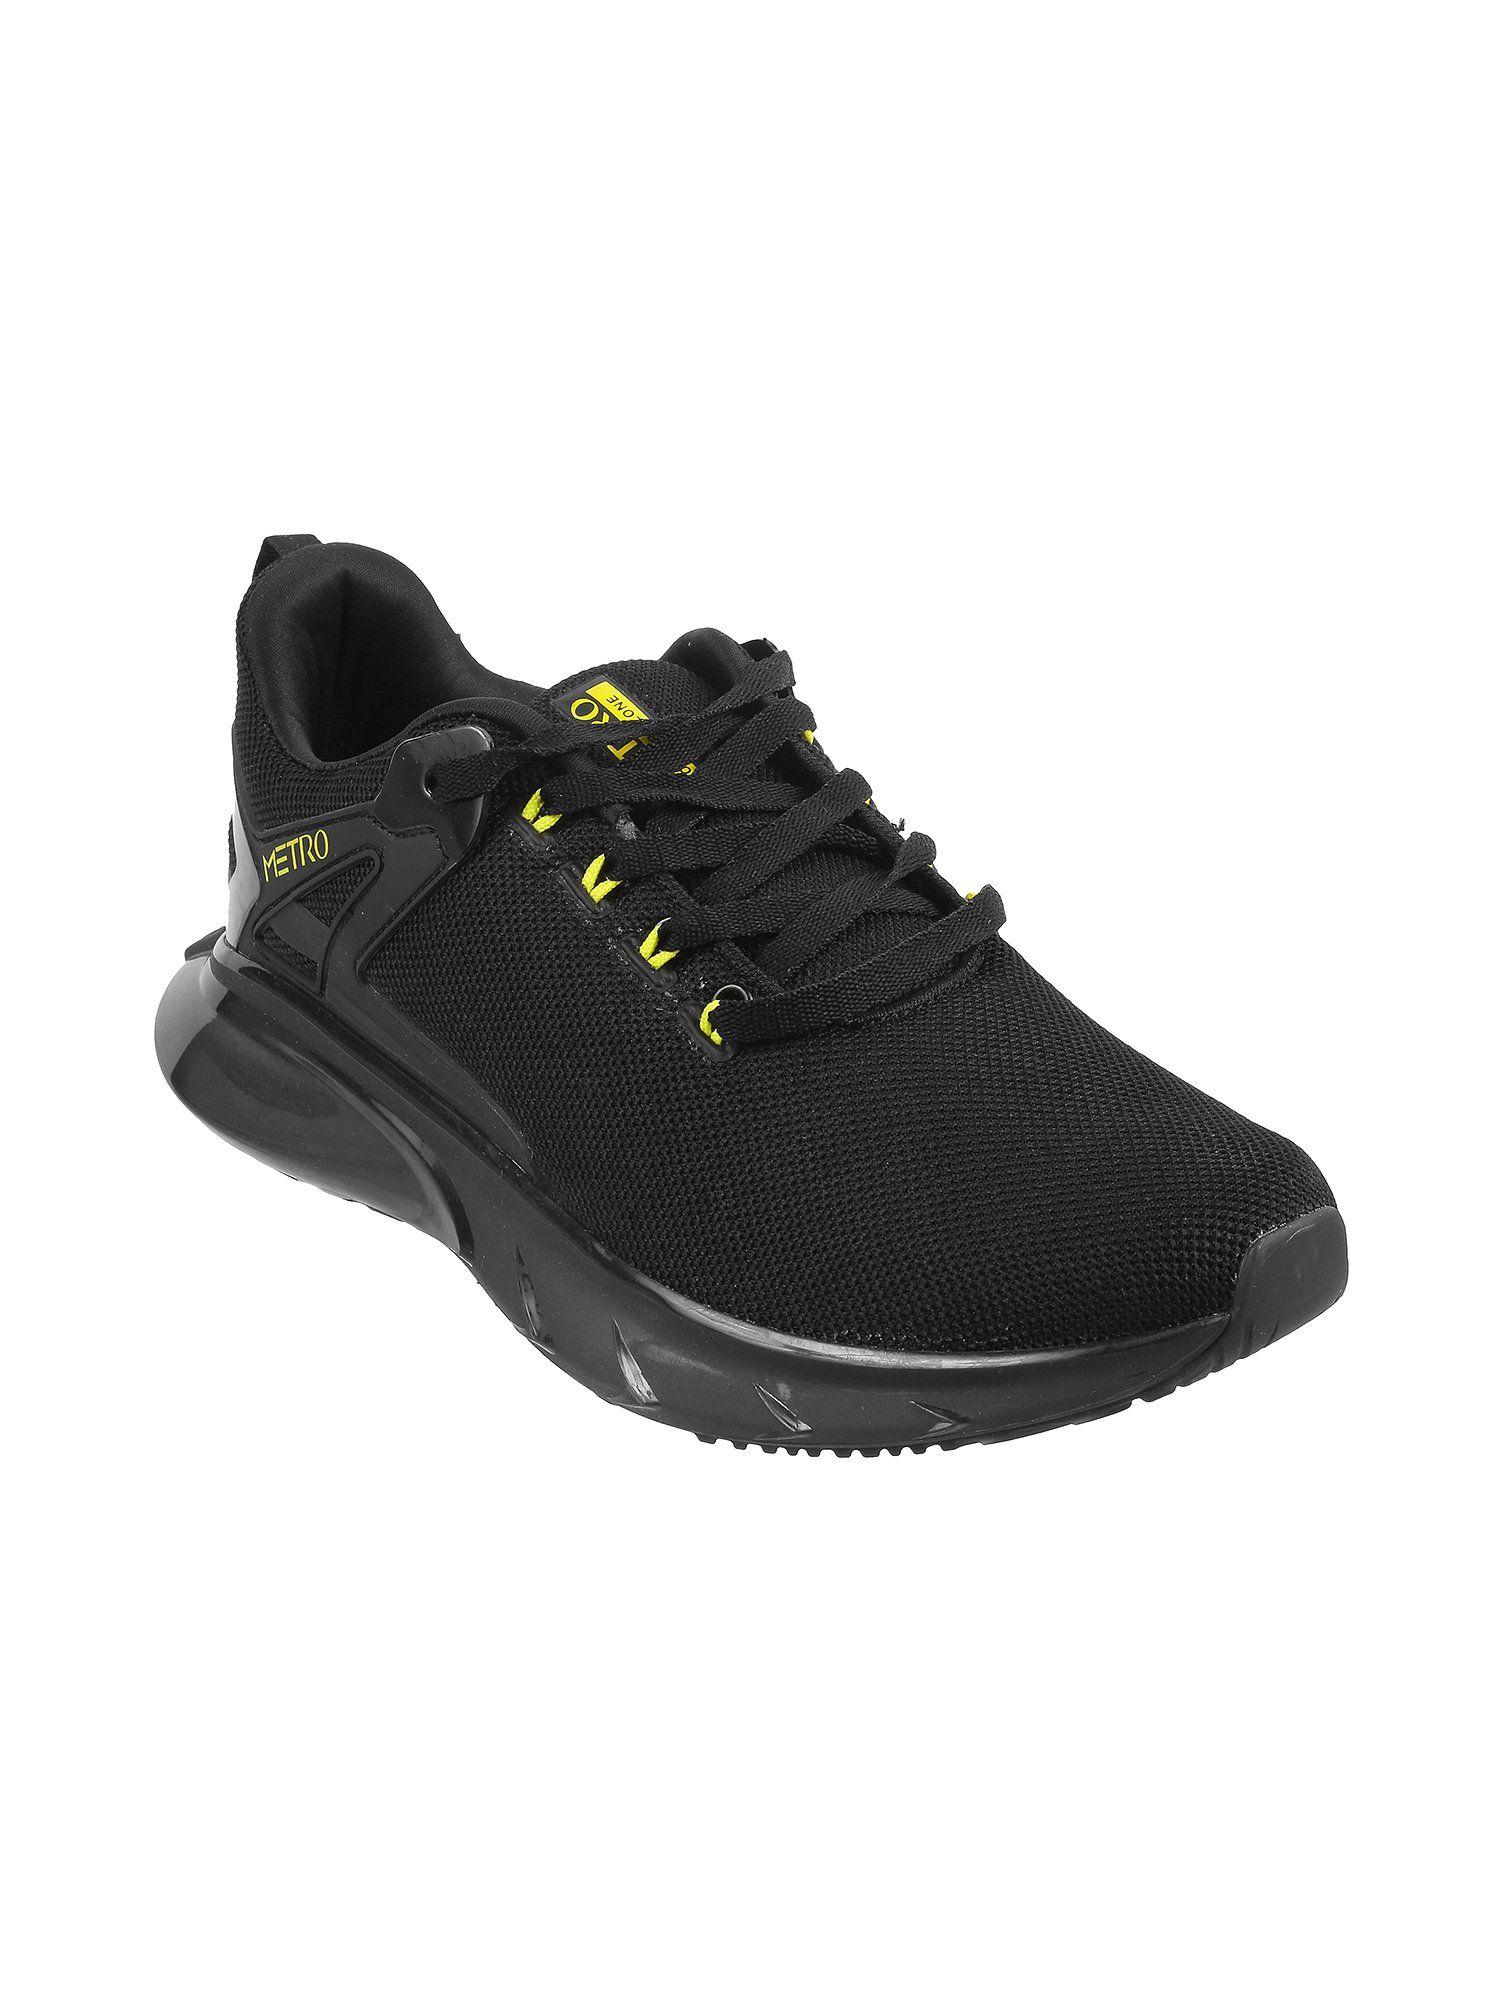 metro-mens-black-sports-lace-ups-shoesmochi-plain-black-walking-shoes